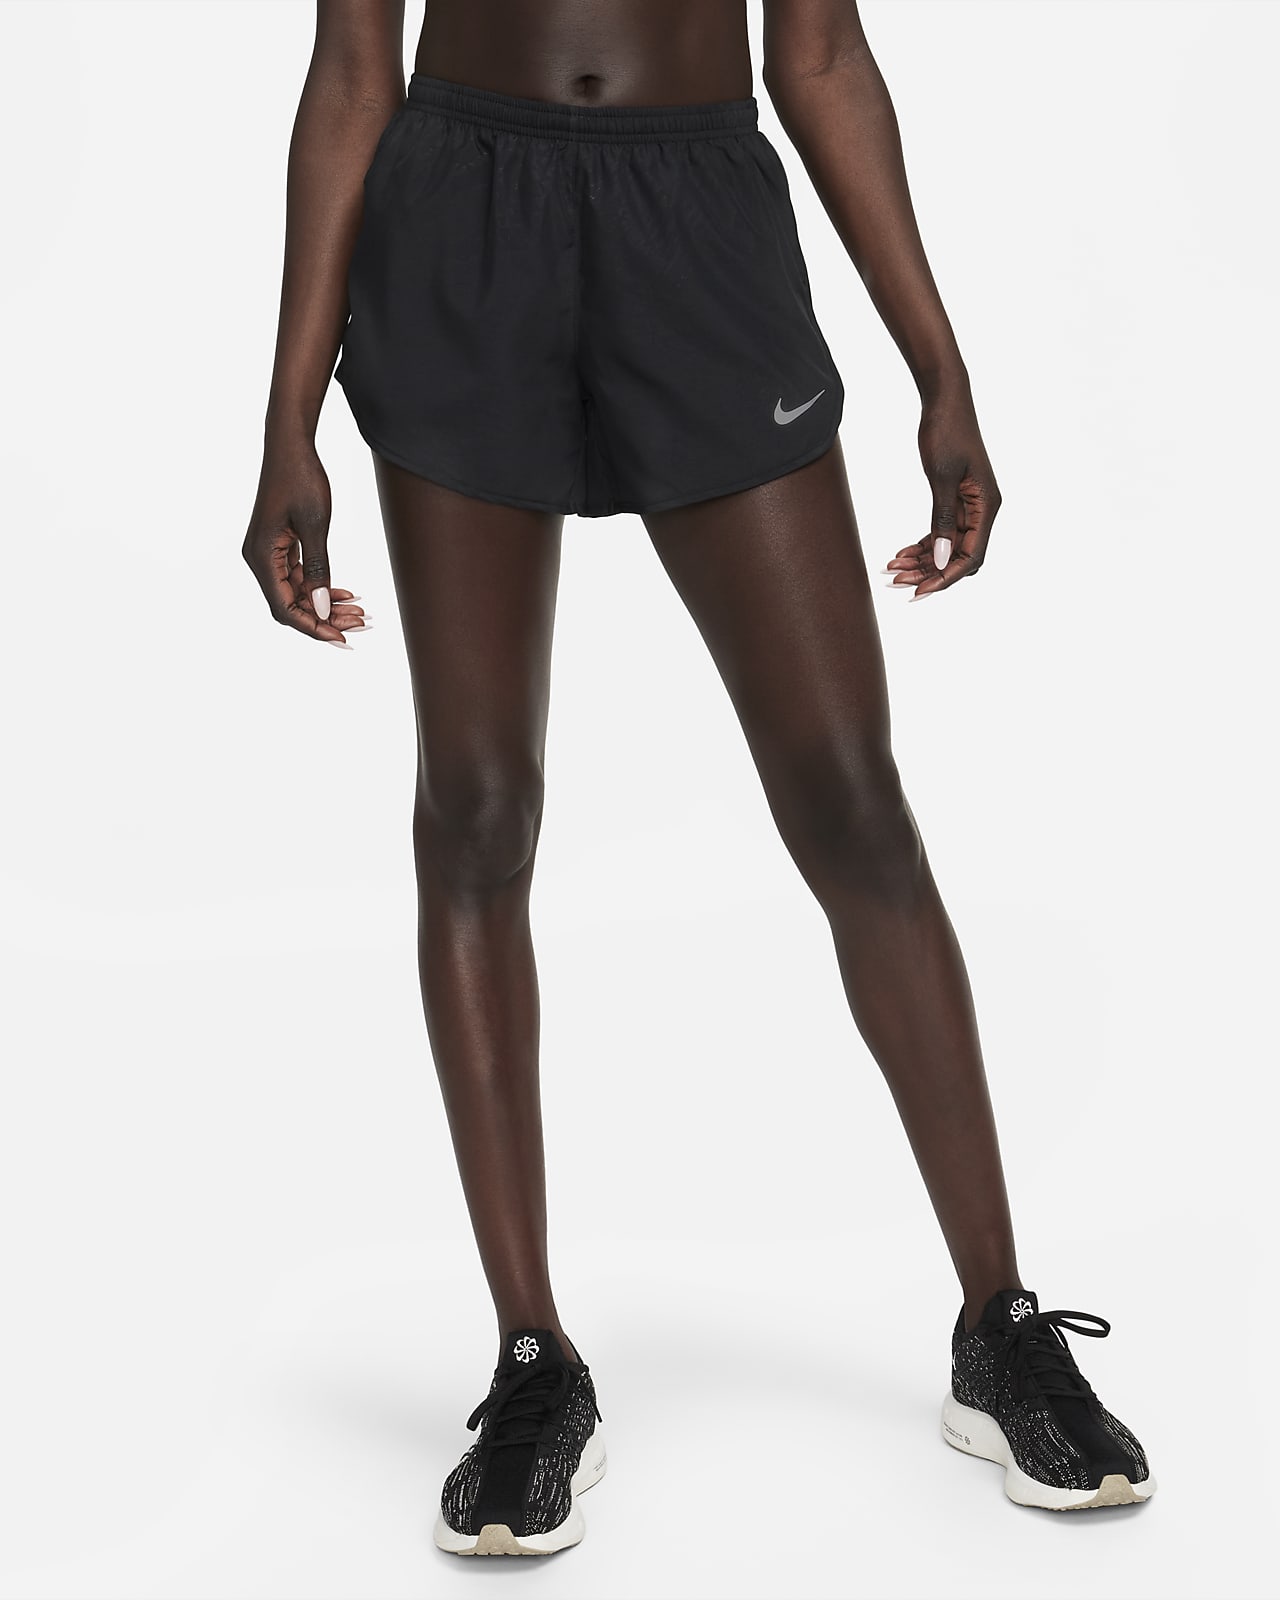 Nike Brief Women